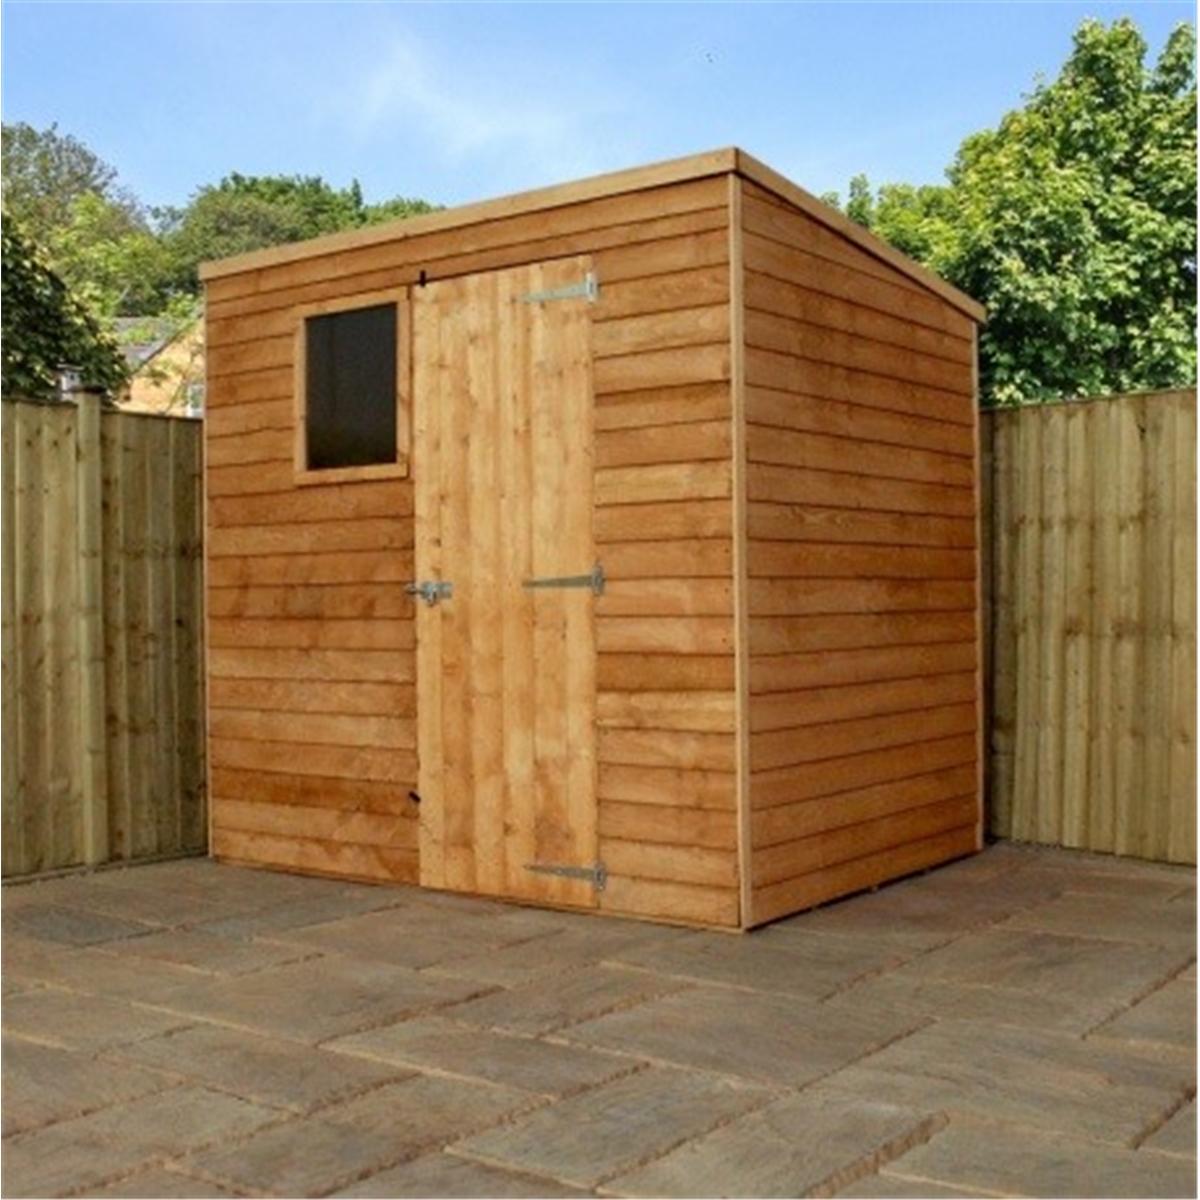 7 x 5 cambridge overlap pent shed with single door + 1